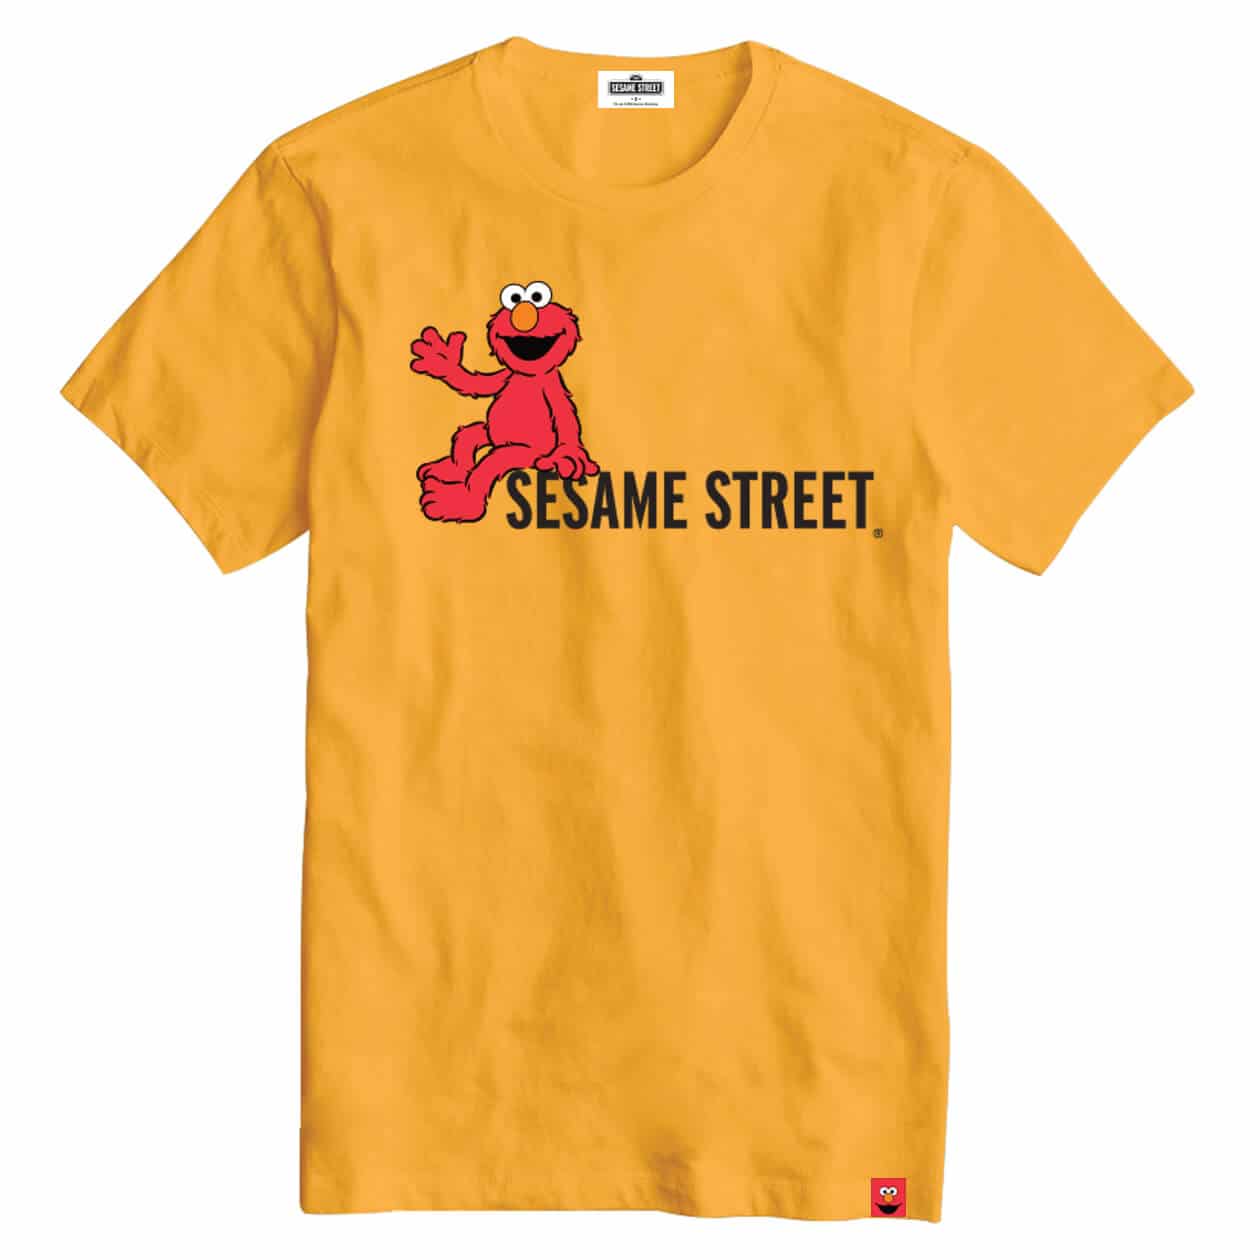 Sesame Street Unisex Graphic T-Shirt (Oversized) I COMMON SENSE